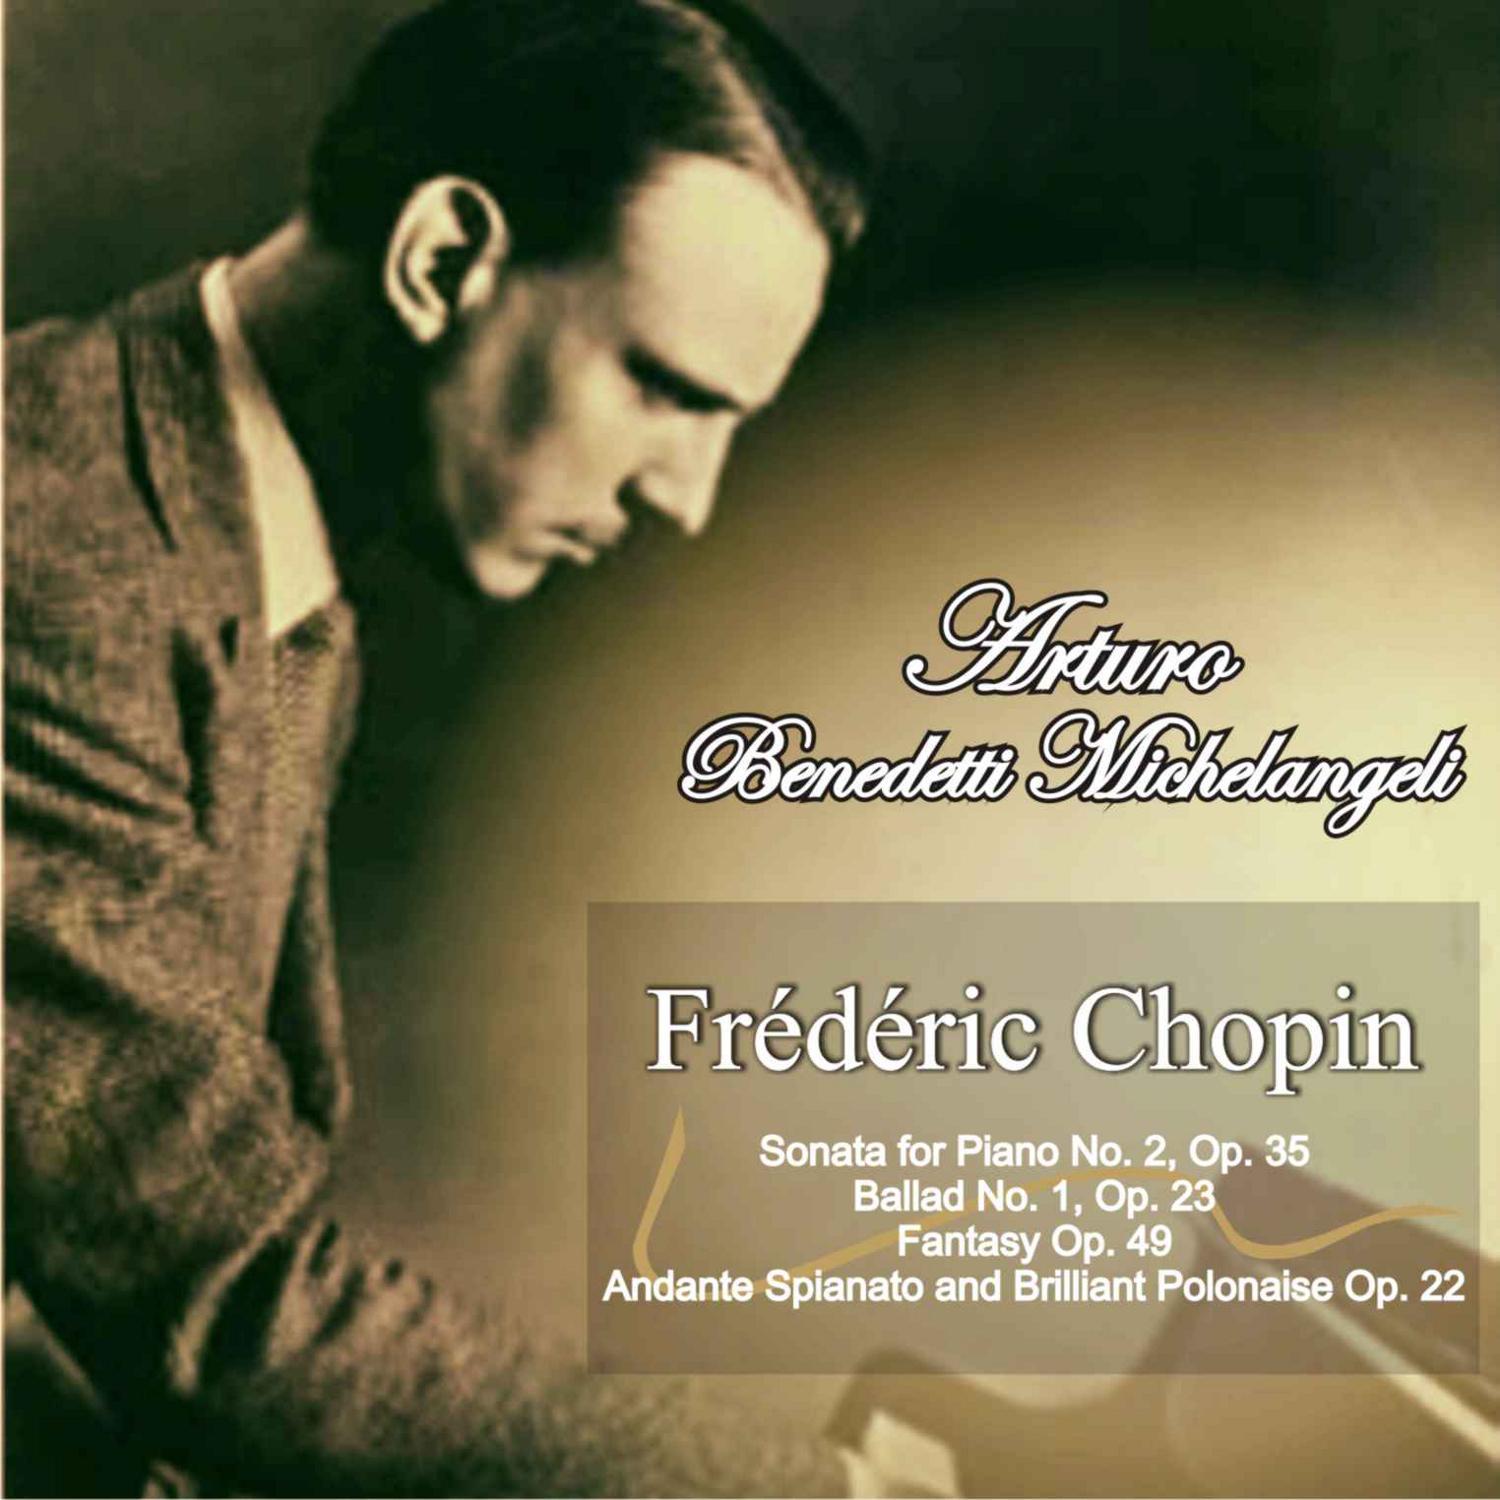 Fre de ric Chopin: Sonata for Piano No. 2 in BFlat Minor Op. 35  Ballad No. 1 in G Minor, Op. 23  Fantasy in F Minor and AFlat Major, Op. 49  Andante Spianato and Brilliant Polonaise in EFlat Major, Op. 22